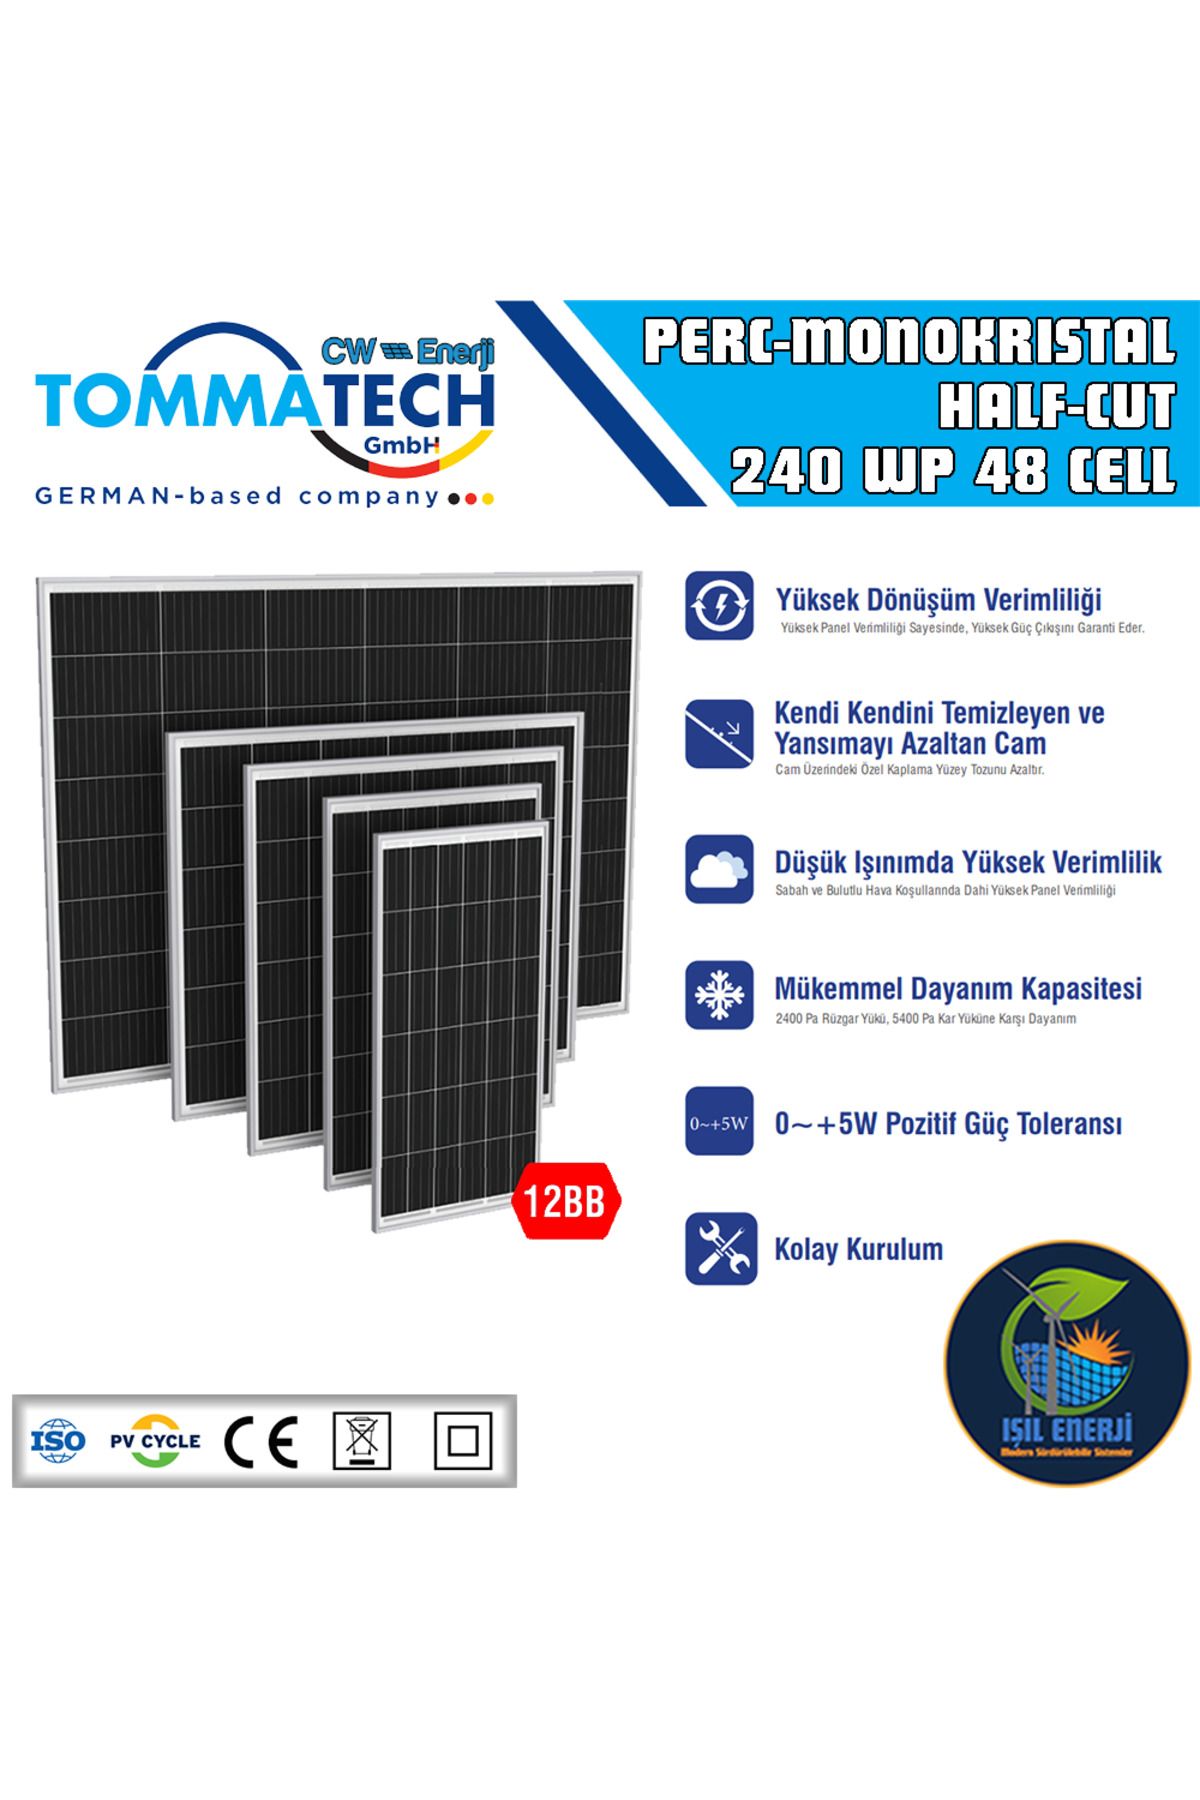 CW Enerji Tommatech 240 Watt Half-Cut Perc Monokristal Güneş Paneli - 240Wp 48PM M12